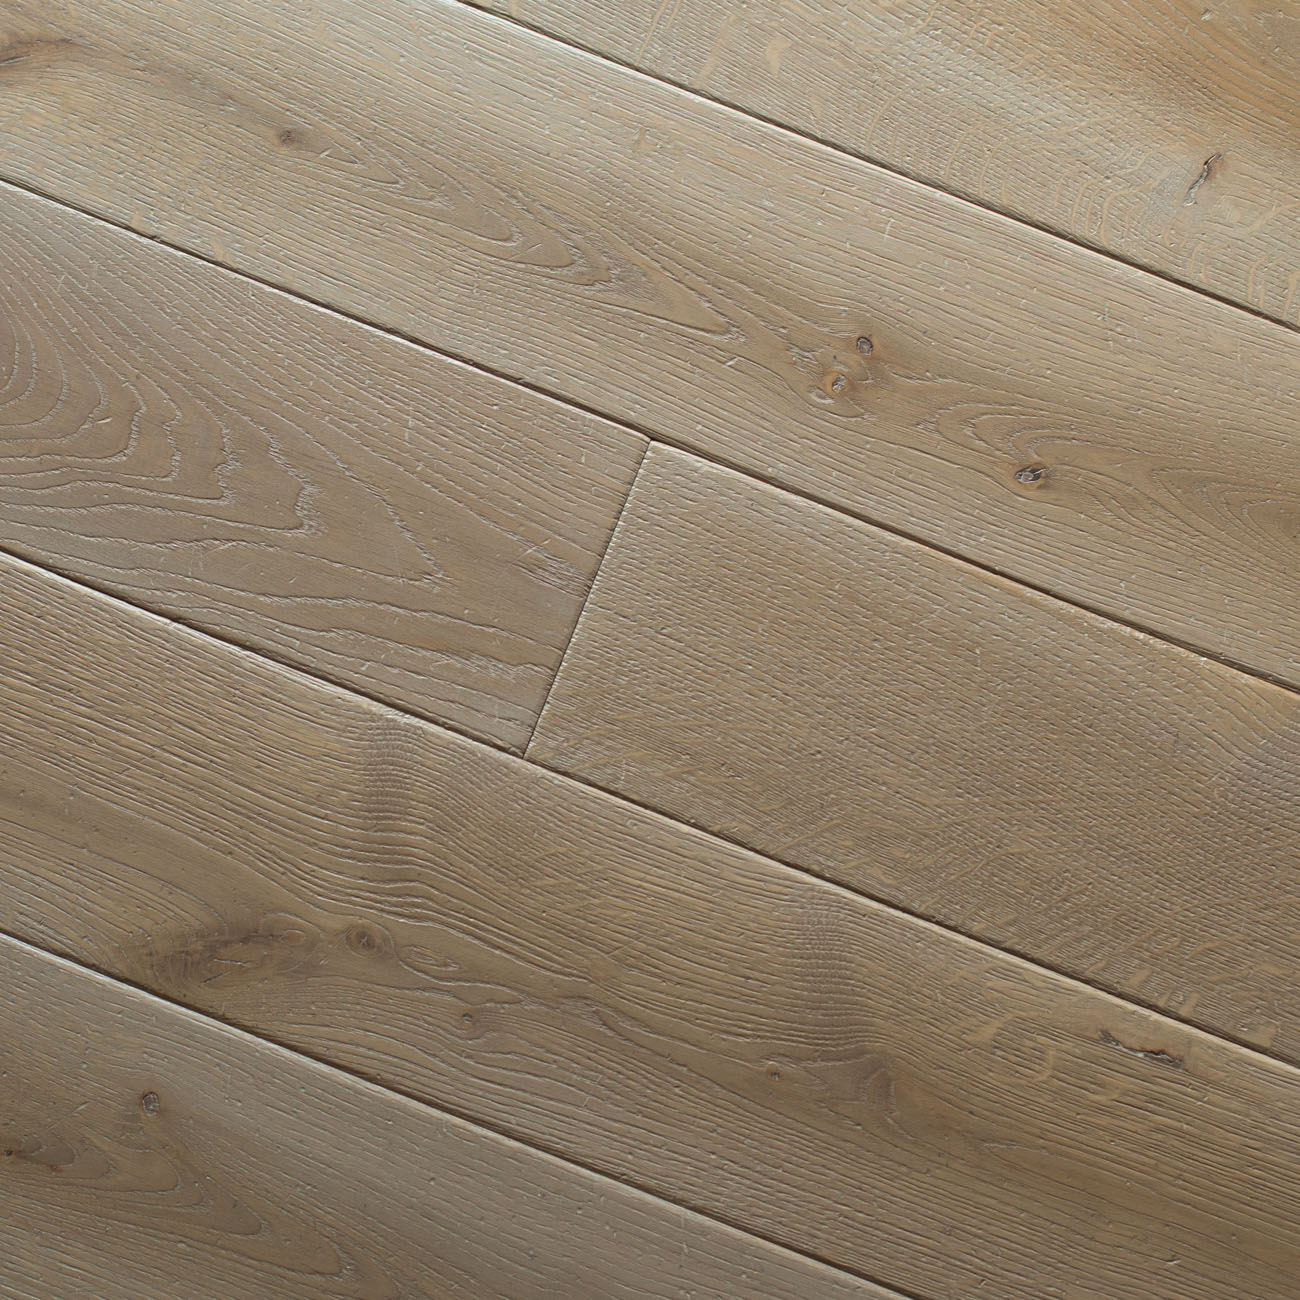 Oak timber flooring